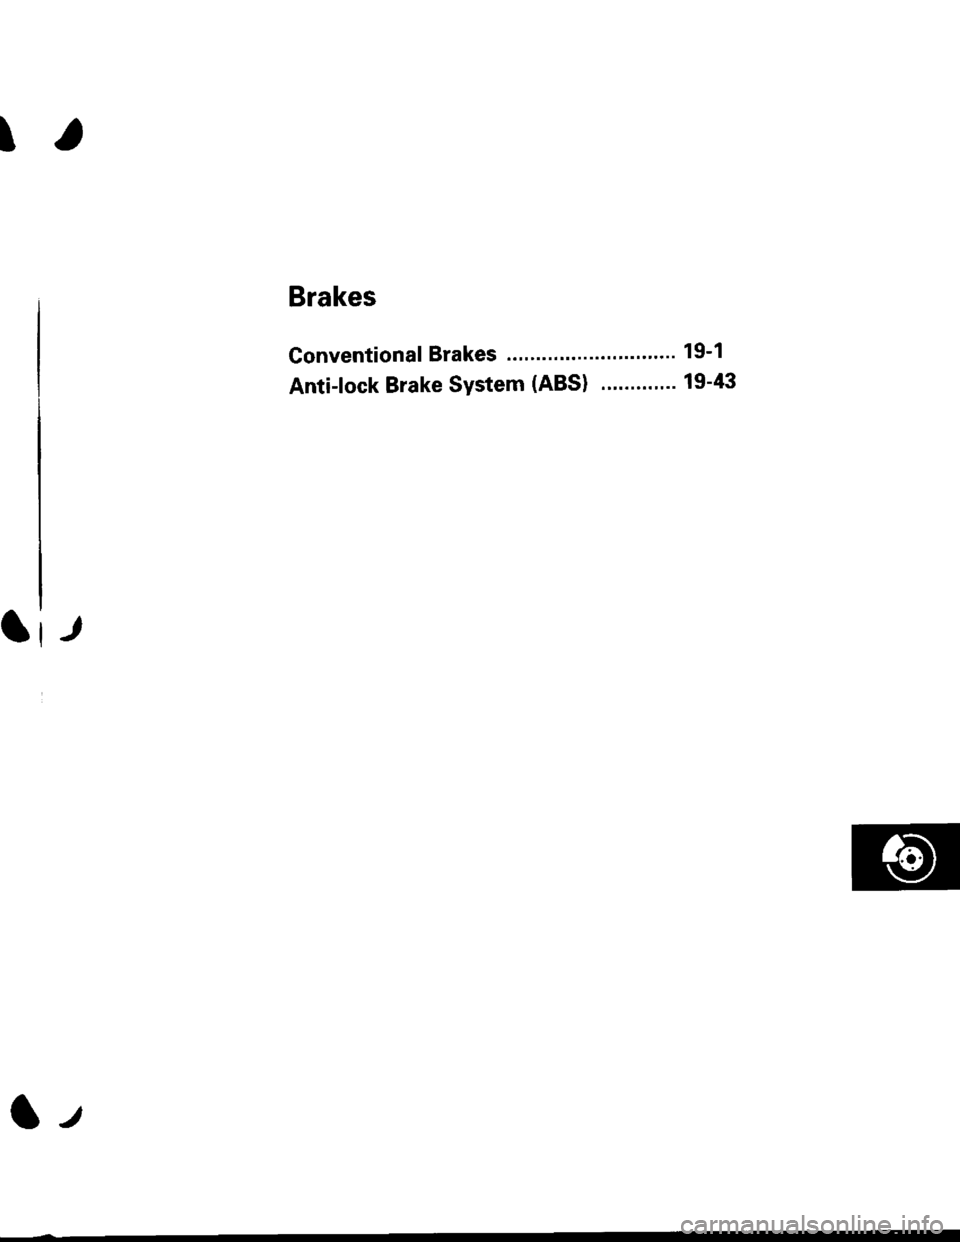 HONDA CIVIC 1998 6.G Workshop Manual t
Brakes
Conventional Brakes ..."... 19-1
Anti-lock Brake System (ABS) ."......".. 19-43
It-,
lt 